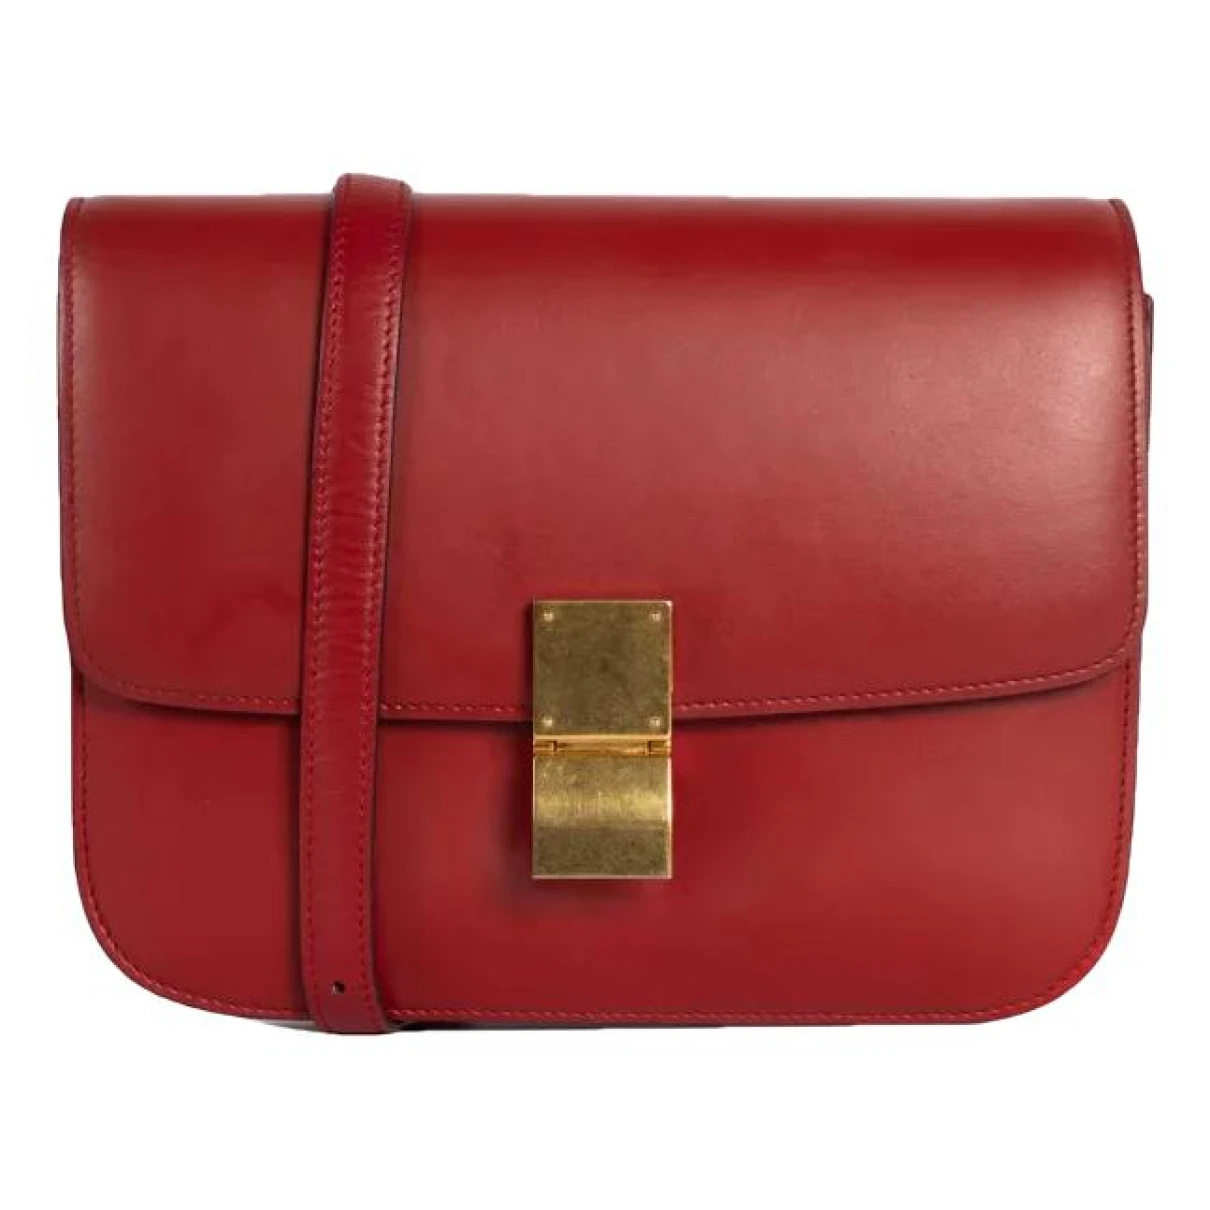 Pre-owned Celine Classic Leather Handbag In Burgundy